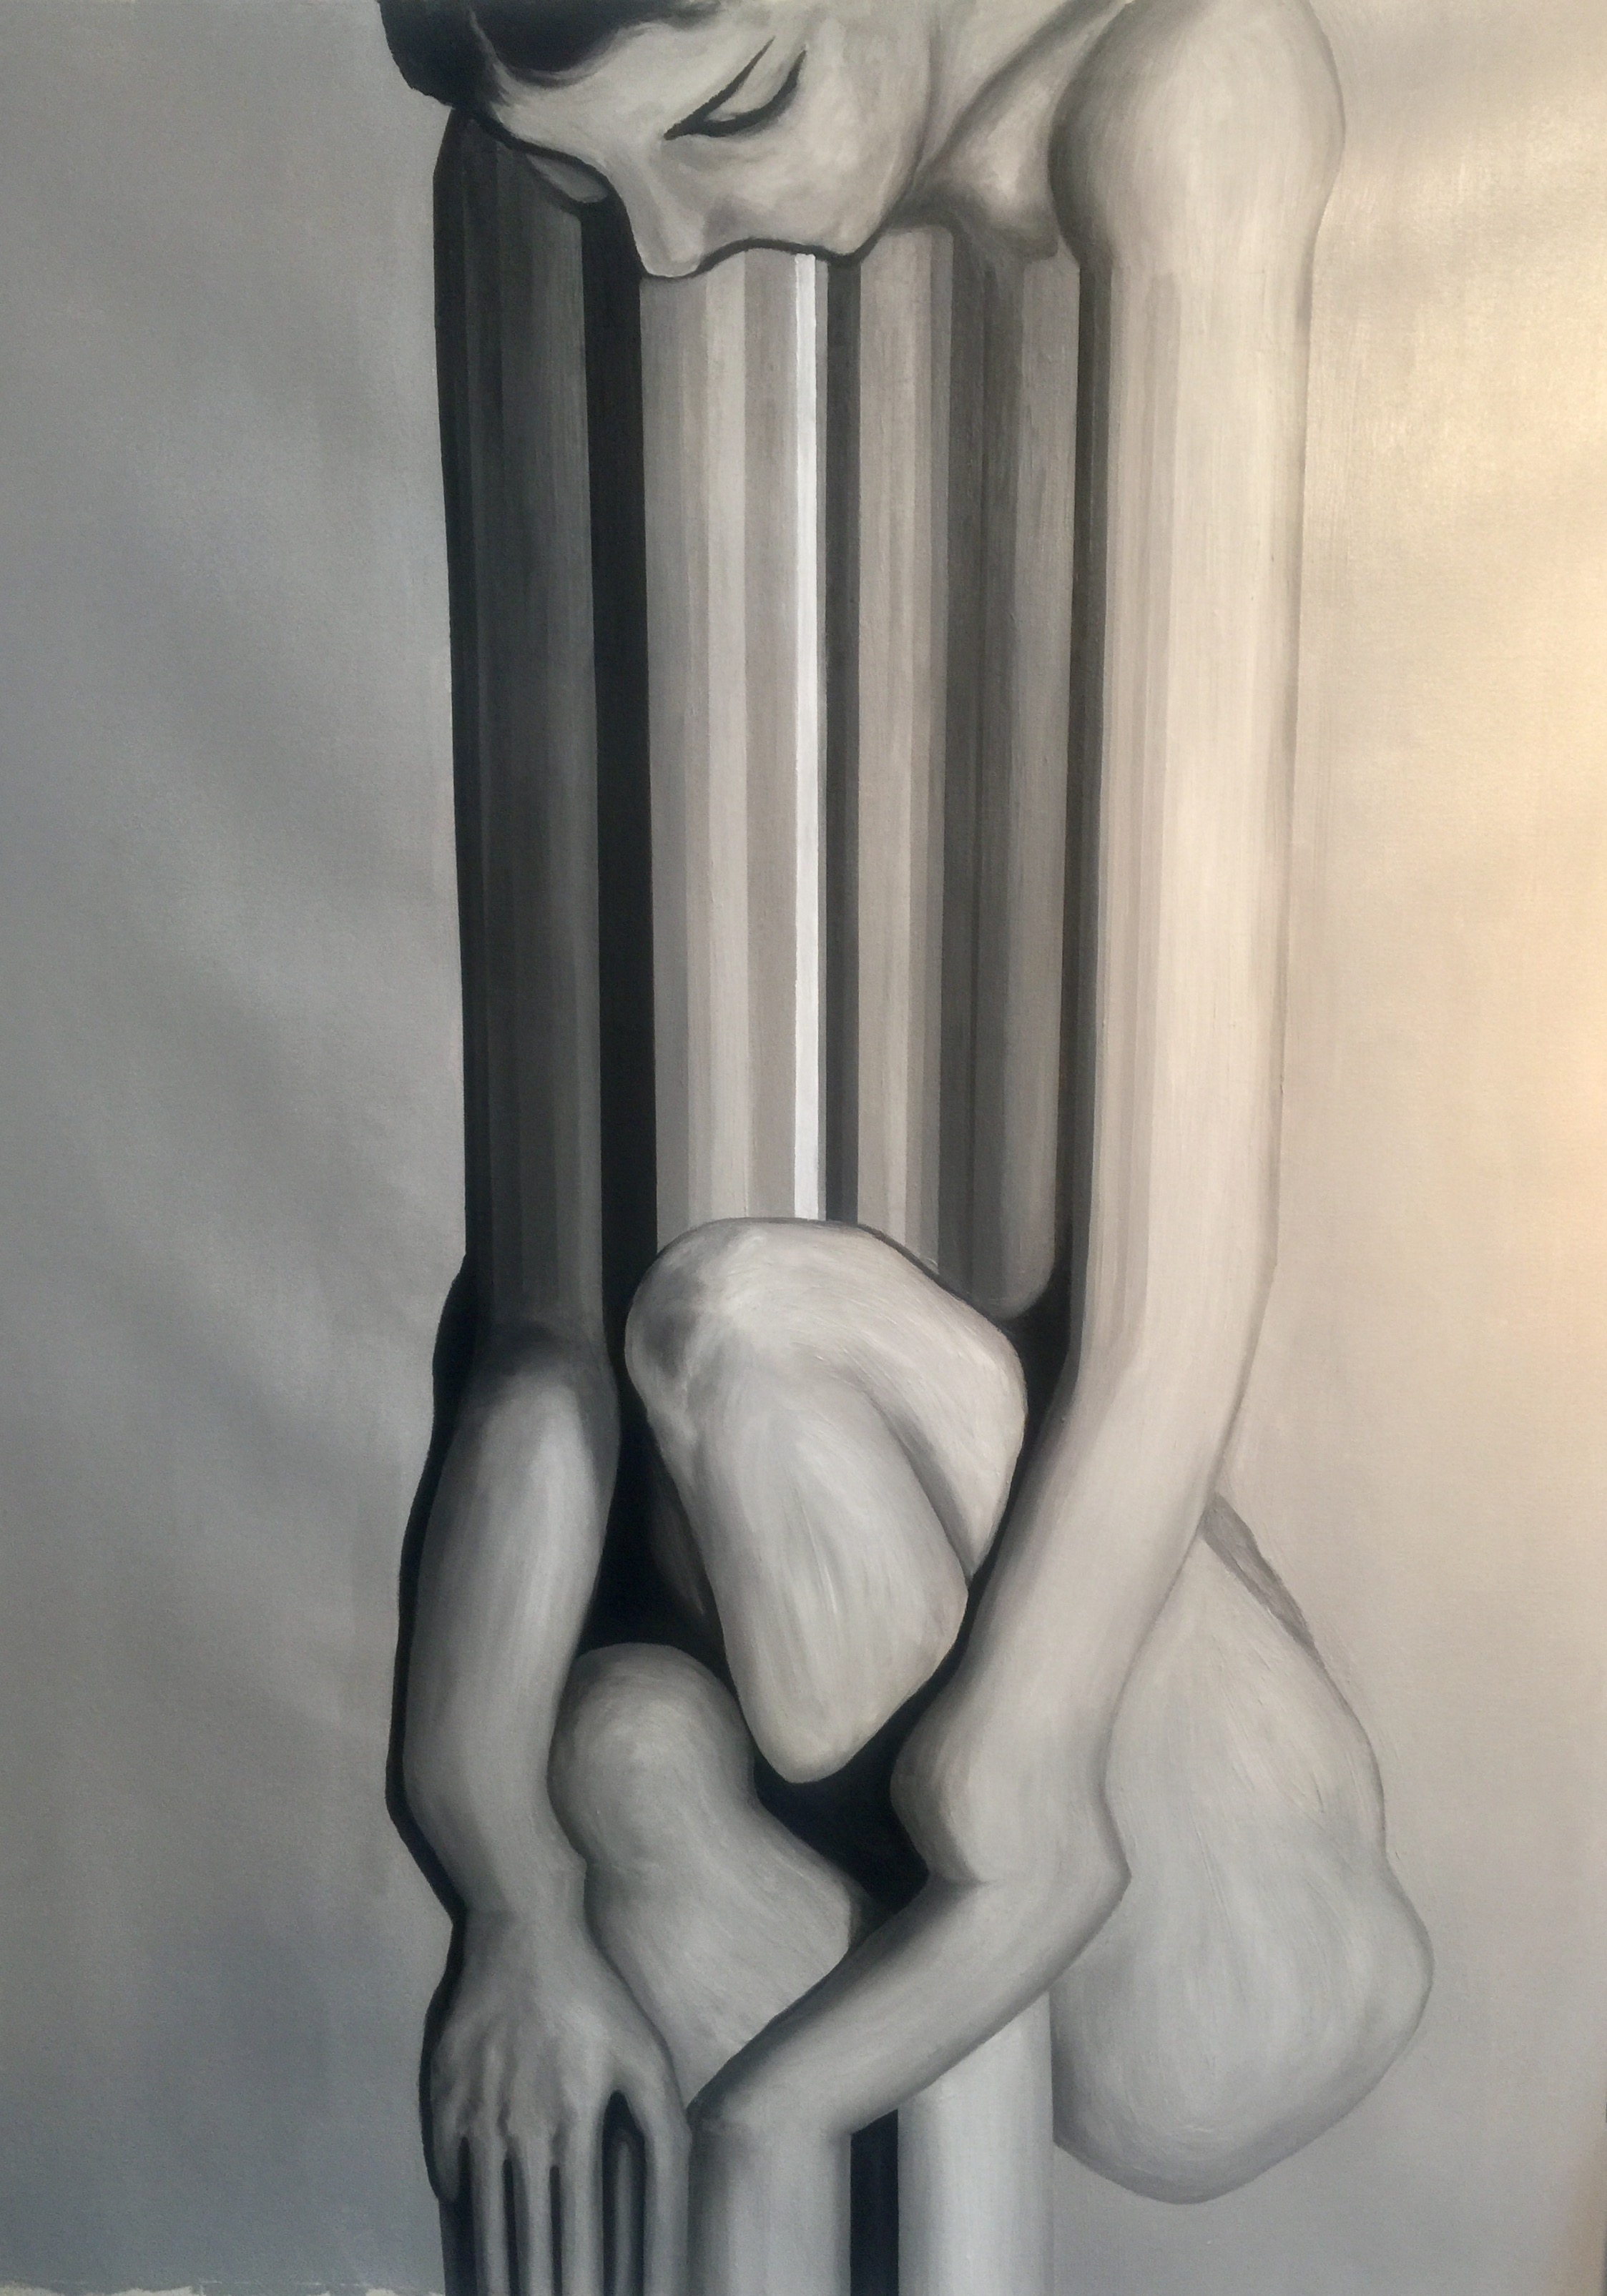 Long Body 2016-17, Acrylic on canvas, 60x60 inch